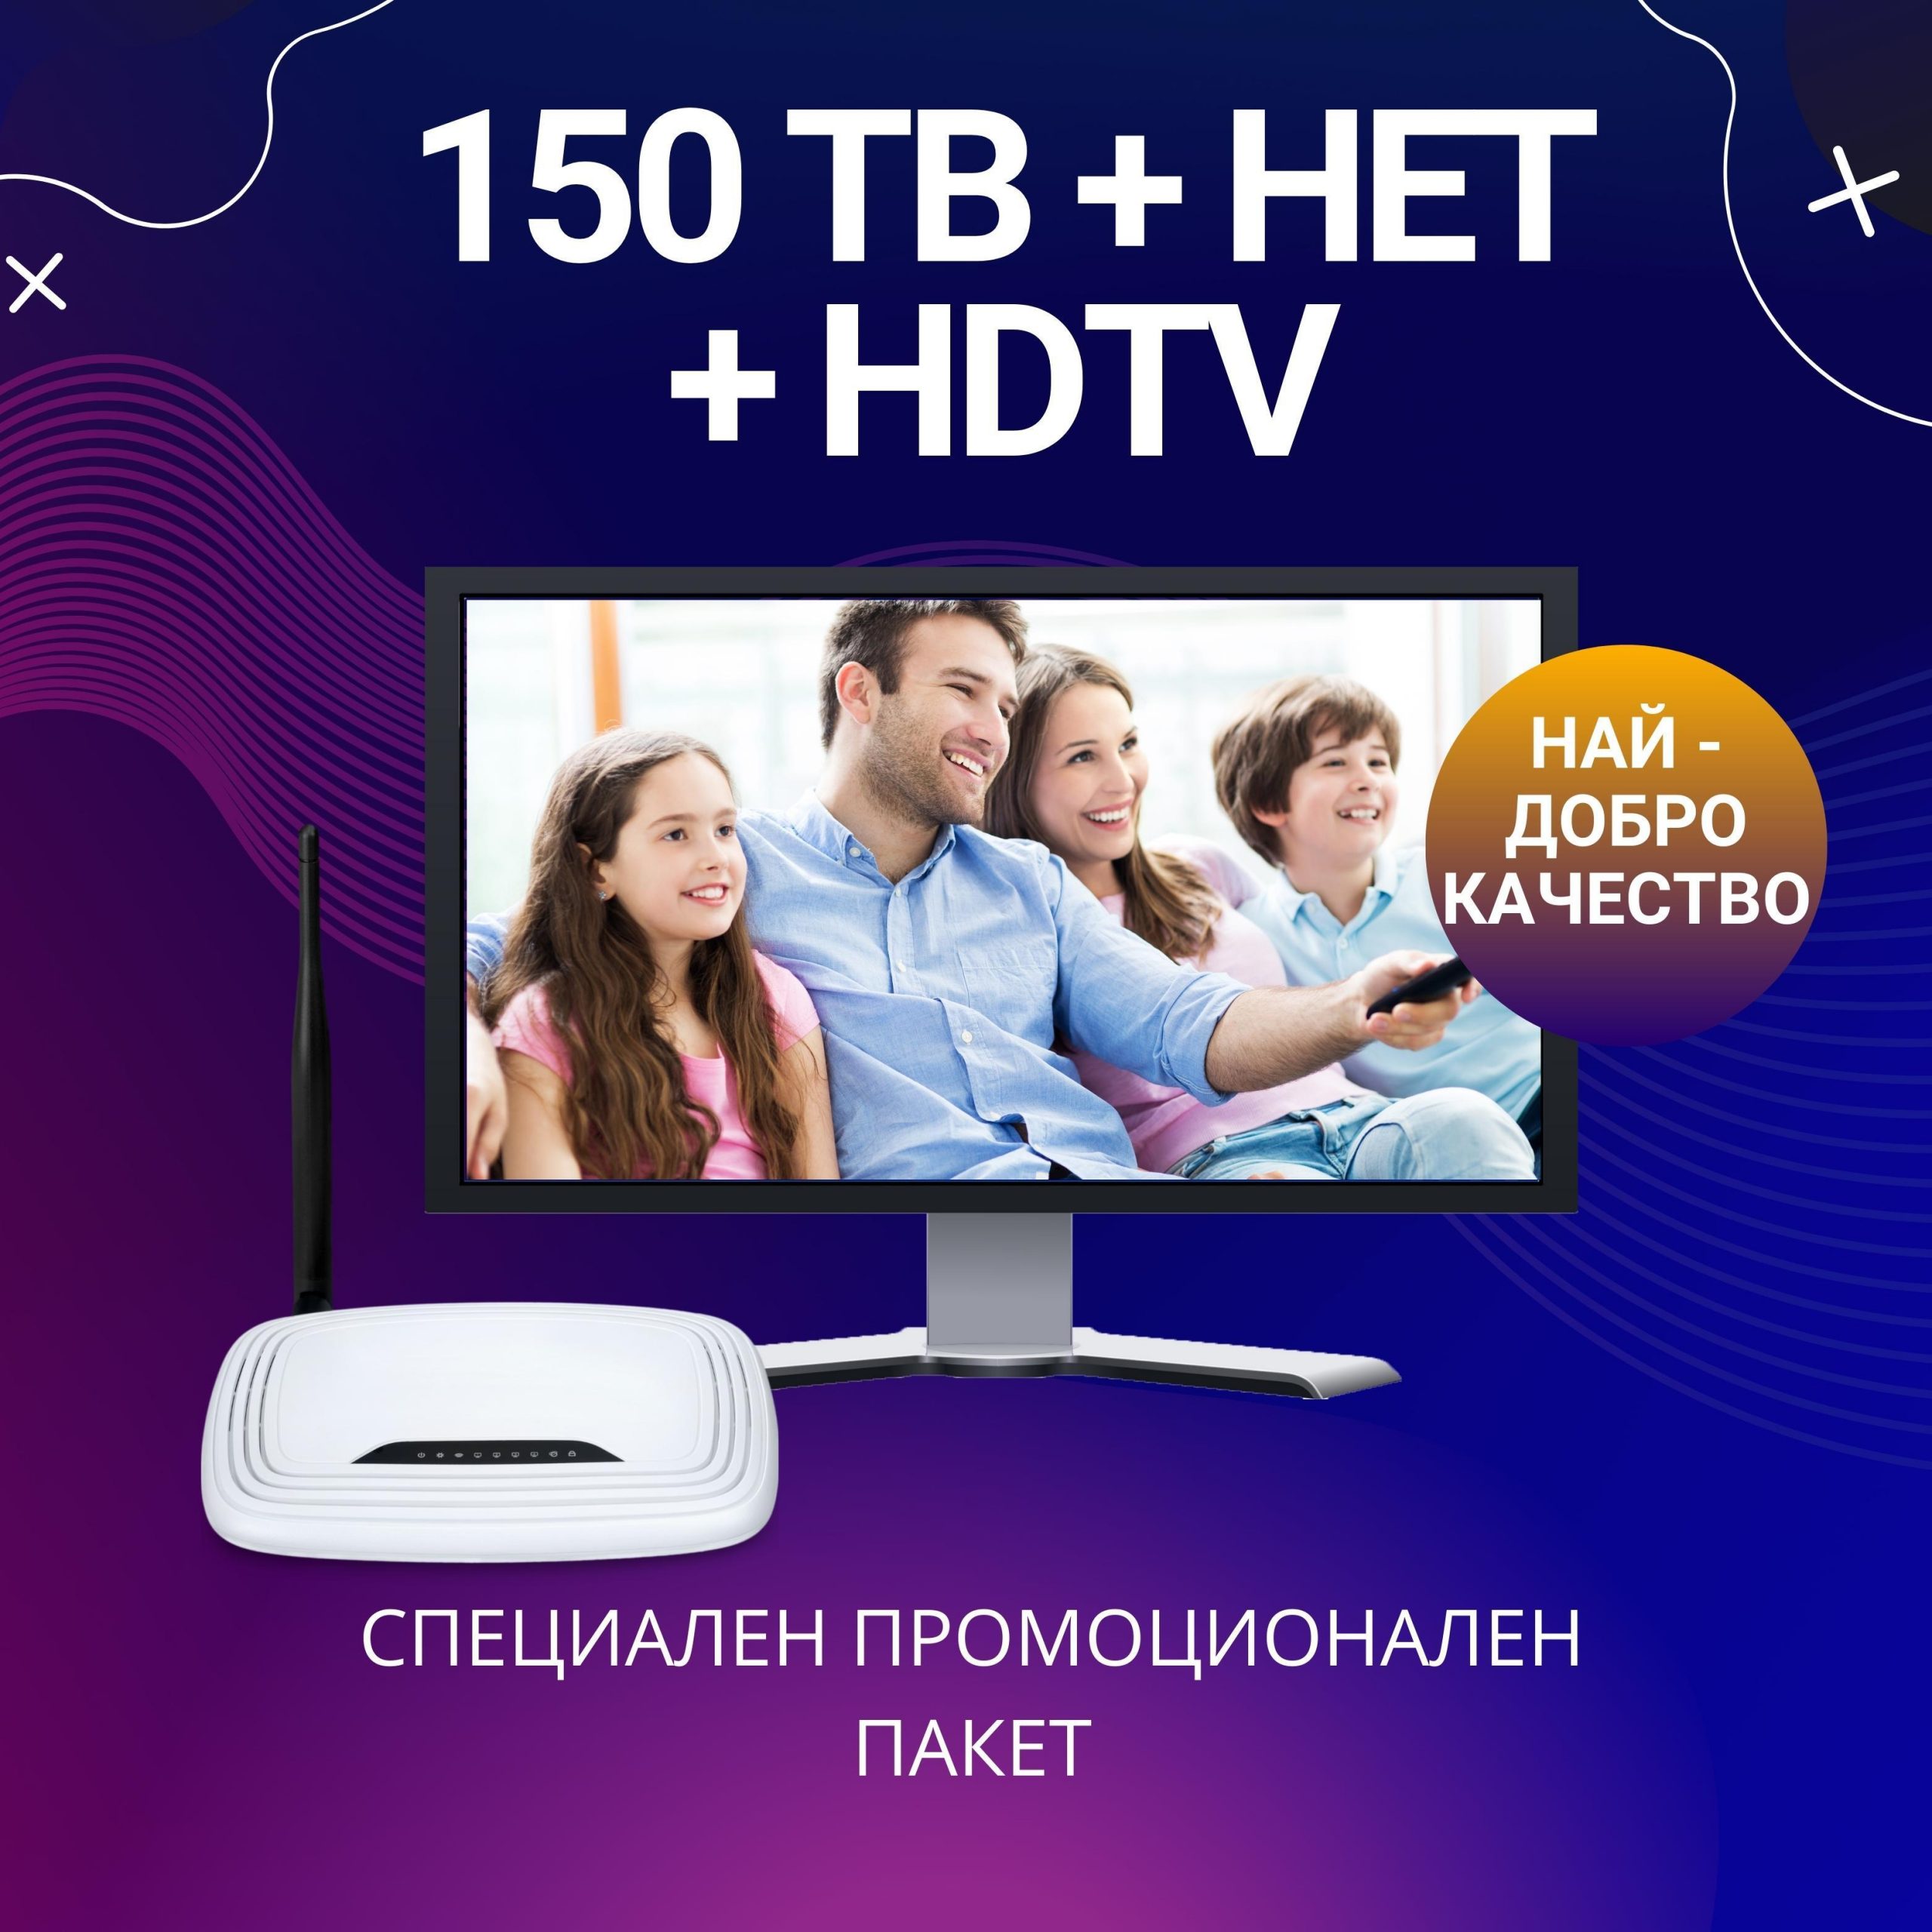 150 ТВ + НЕТ + HDTV ЕК Царевец